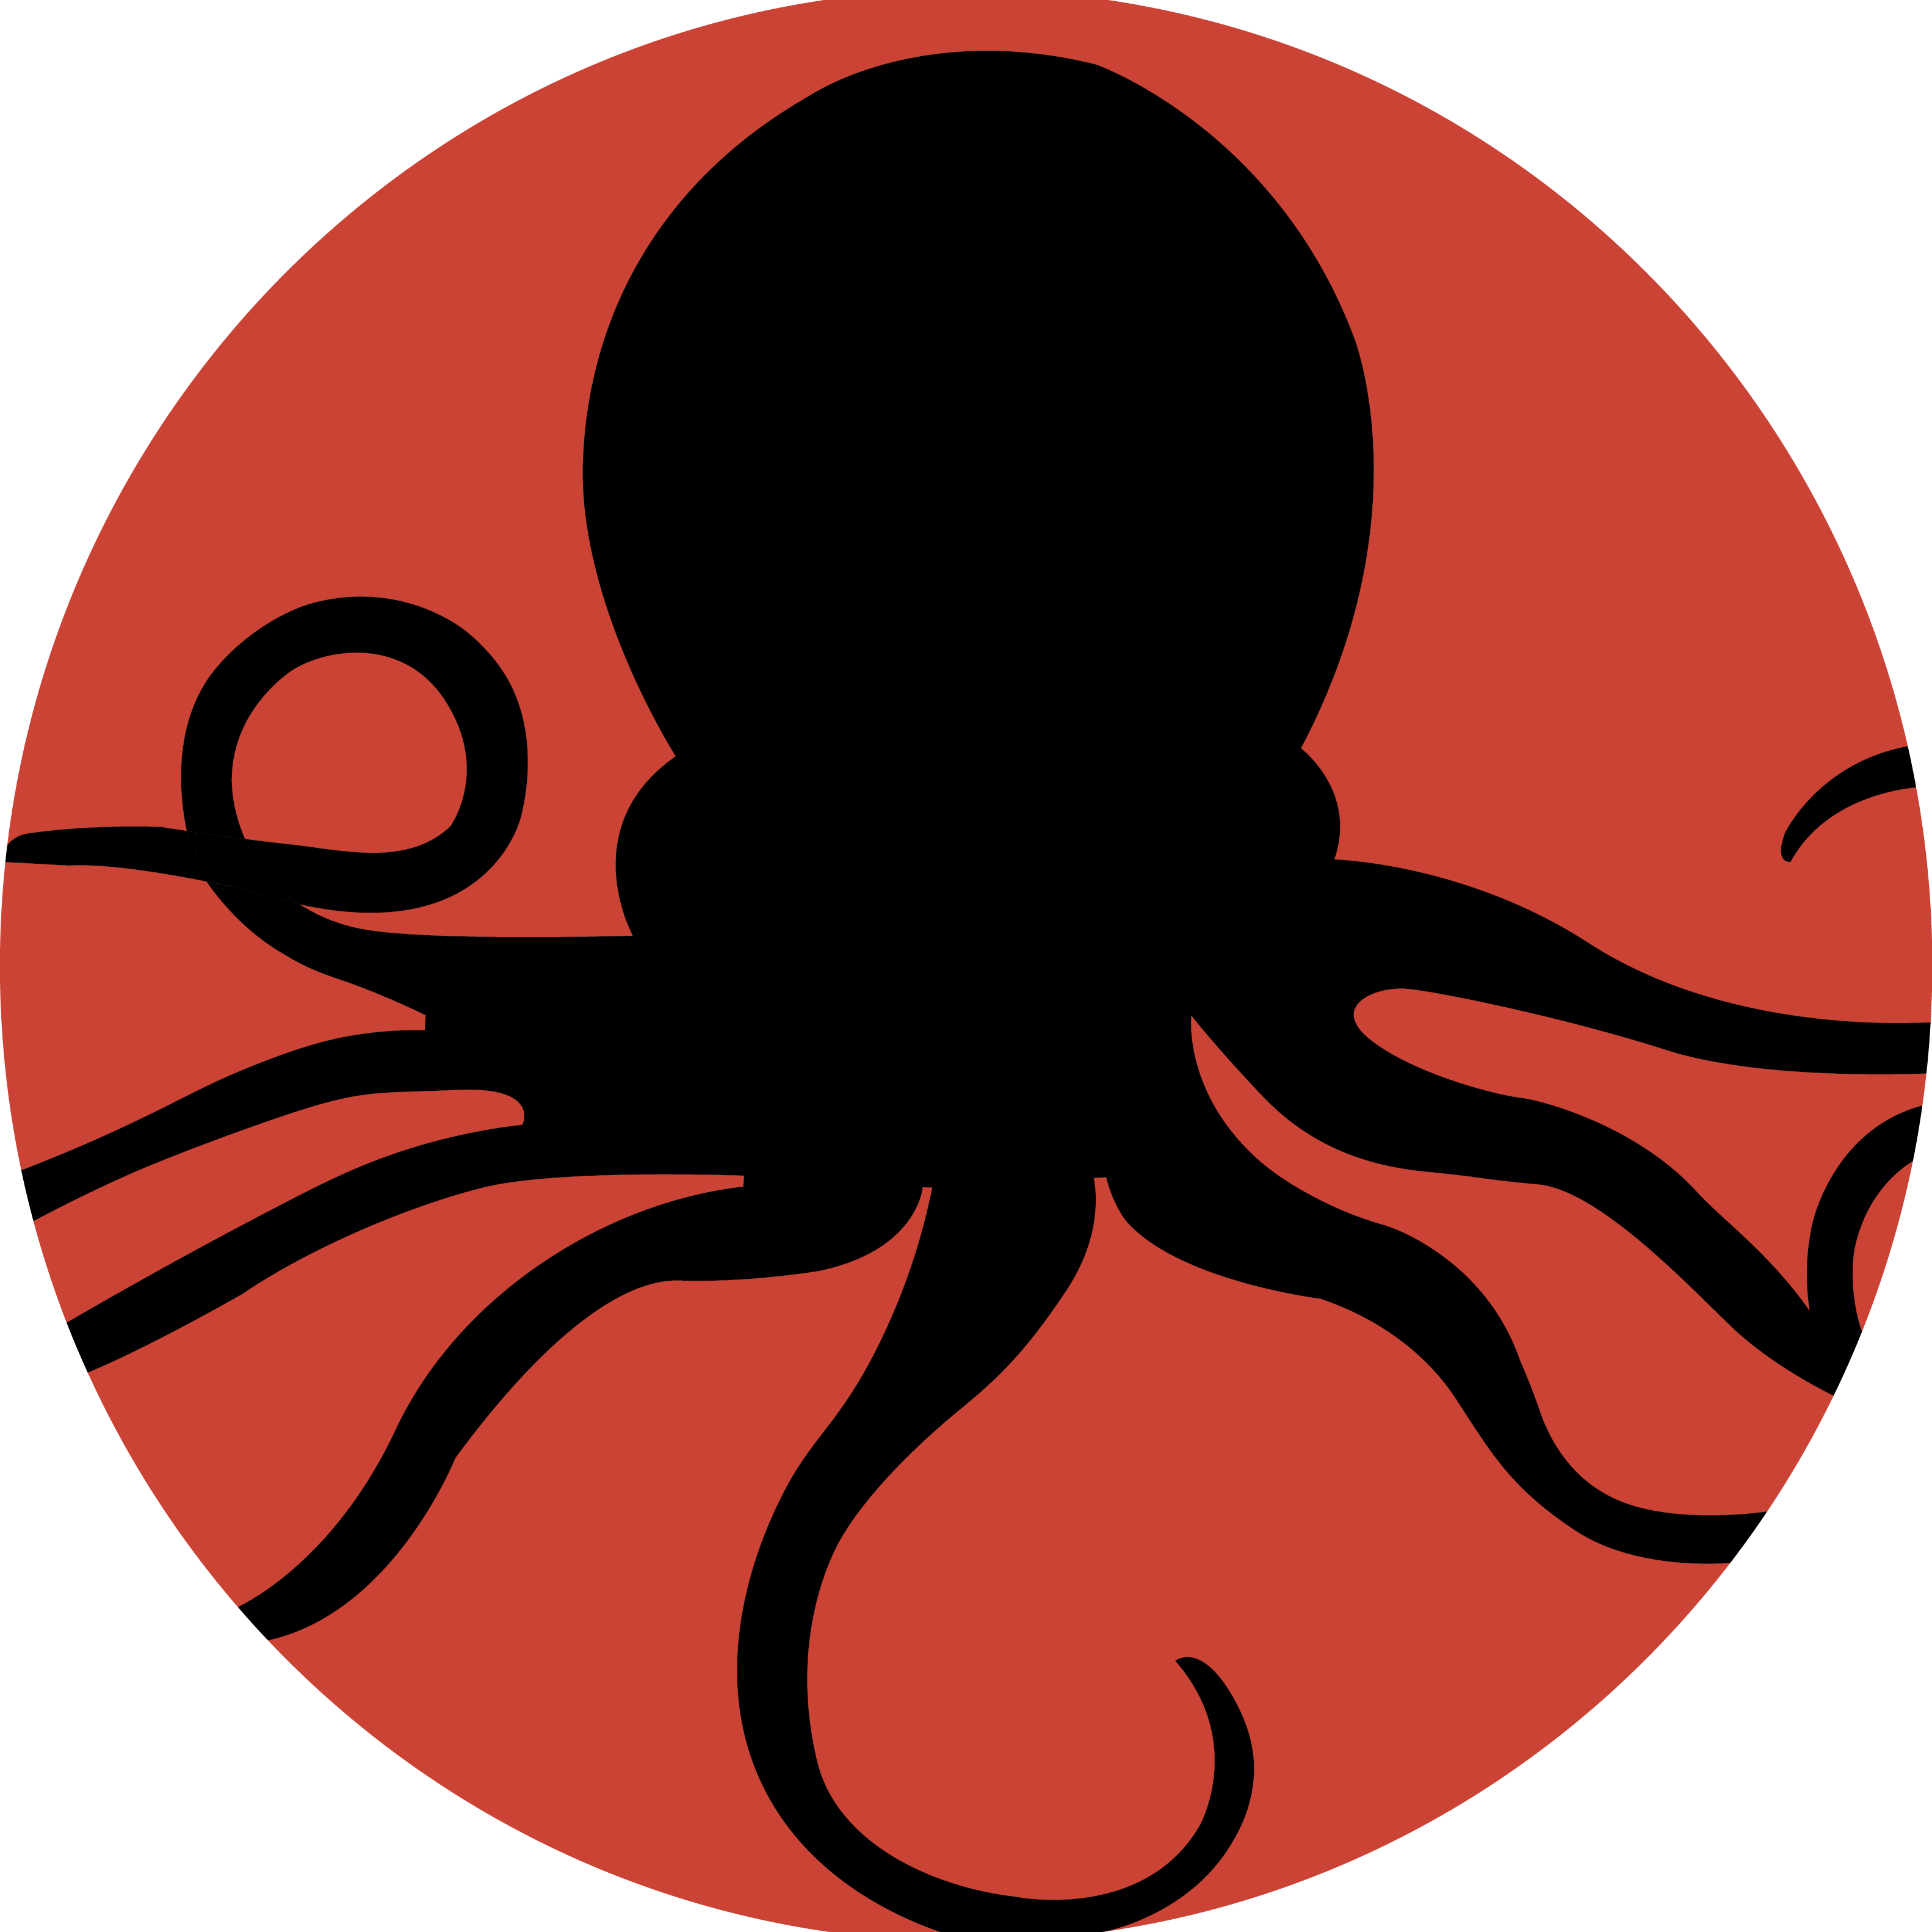 Octopus Cephalopod Animal Invertebrate Clip Art - Gloucester Road Tube Station (3165x3165)